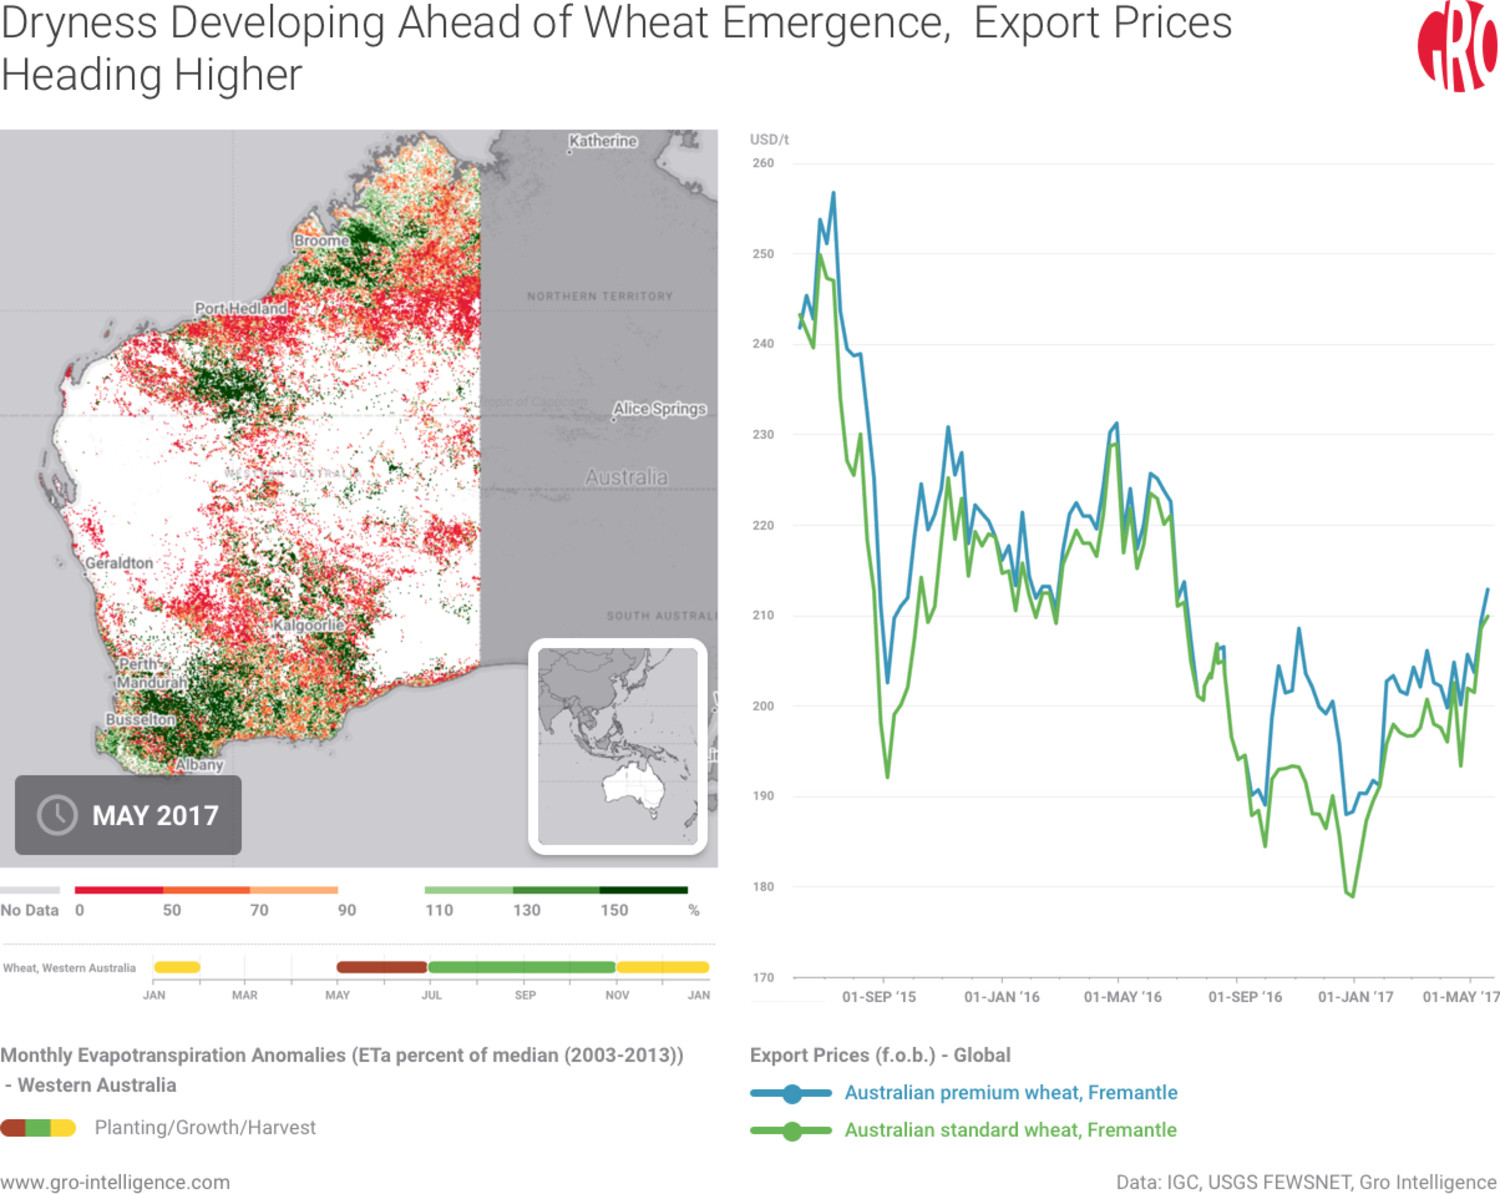 Evapotranspiration anomalies across Australia and Wheat Export Prices